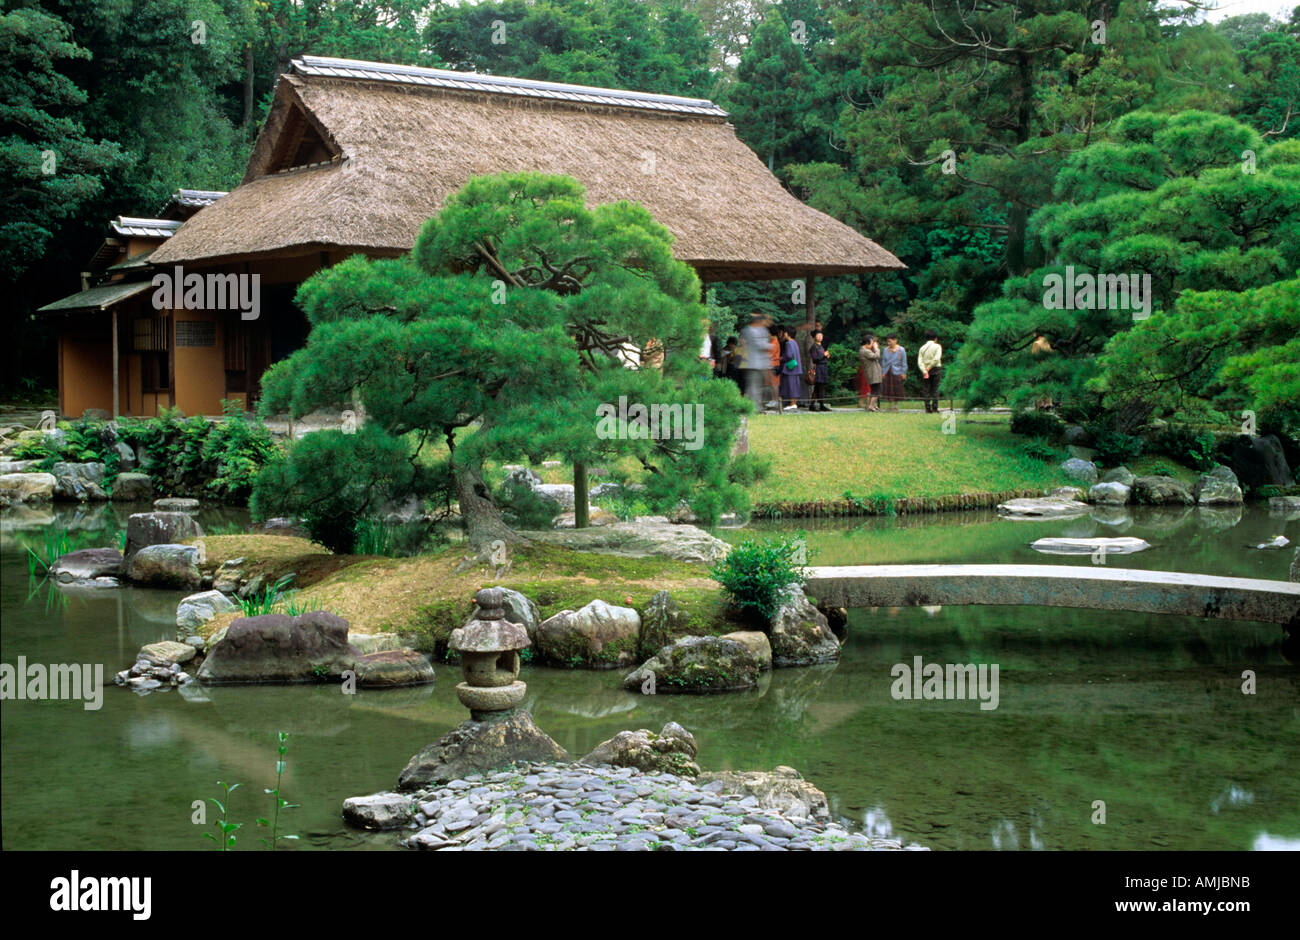 Japan, Kansai, Kyoto, The Katsura Imperial Villa (Katsura Rikyū) is an Imperial residence with associated gardens and outbuildings Stock Photo